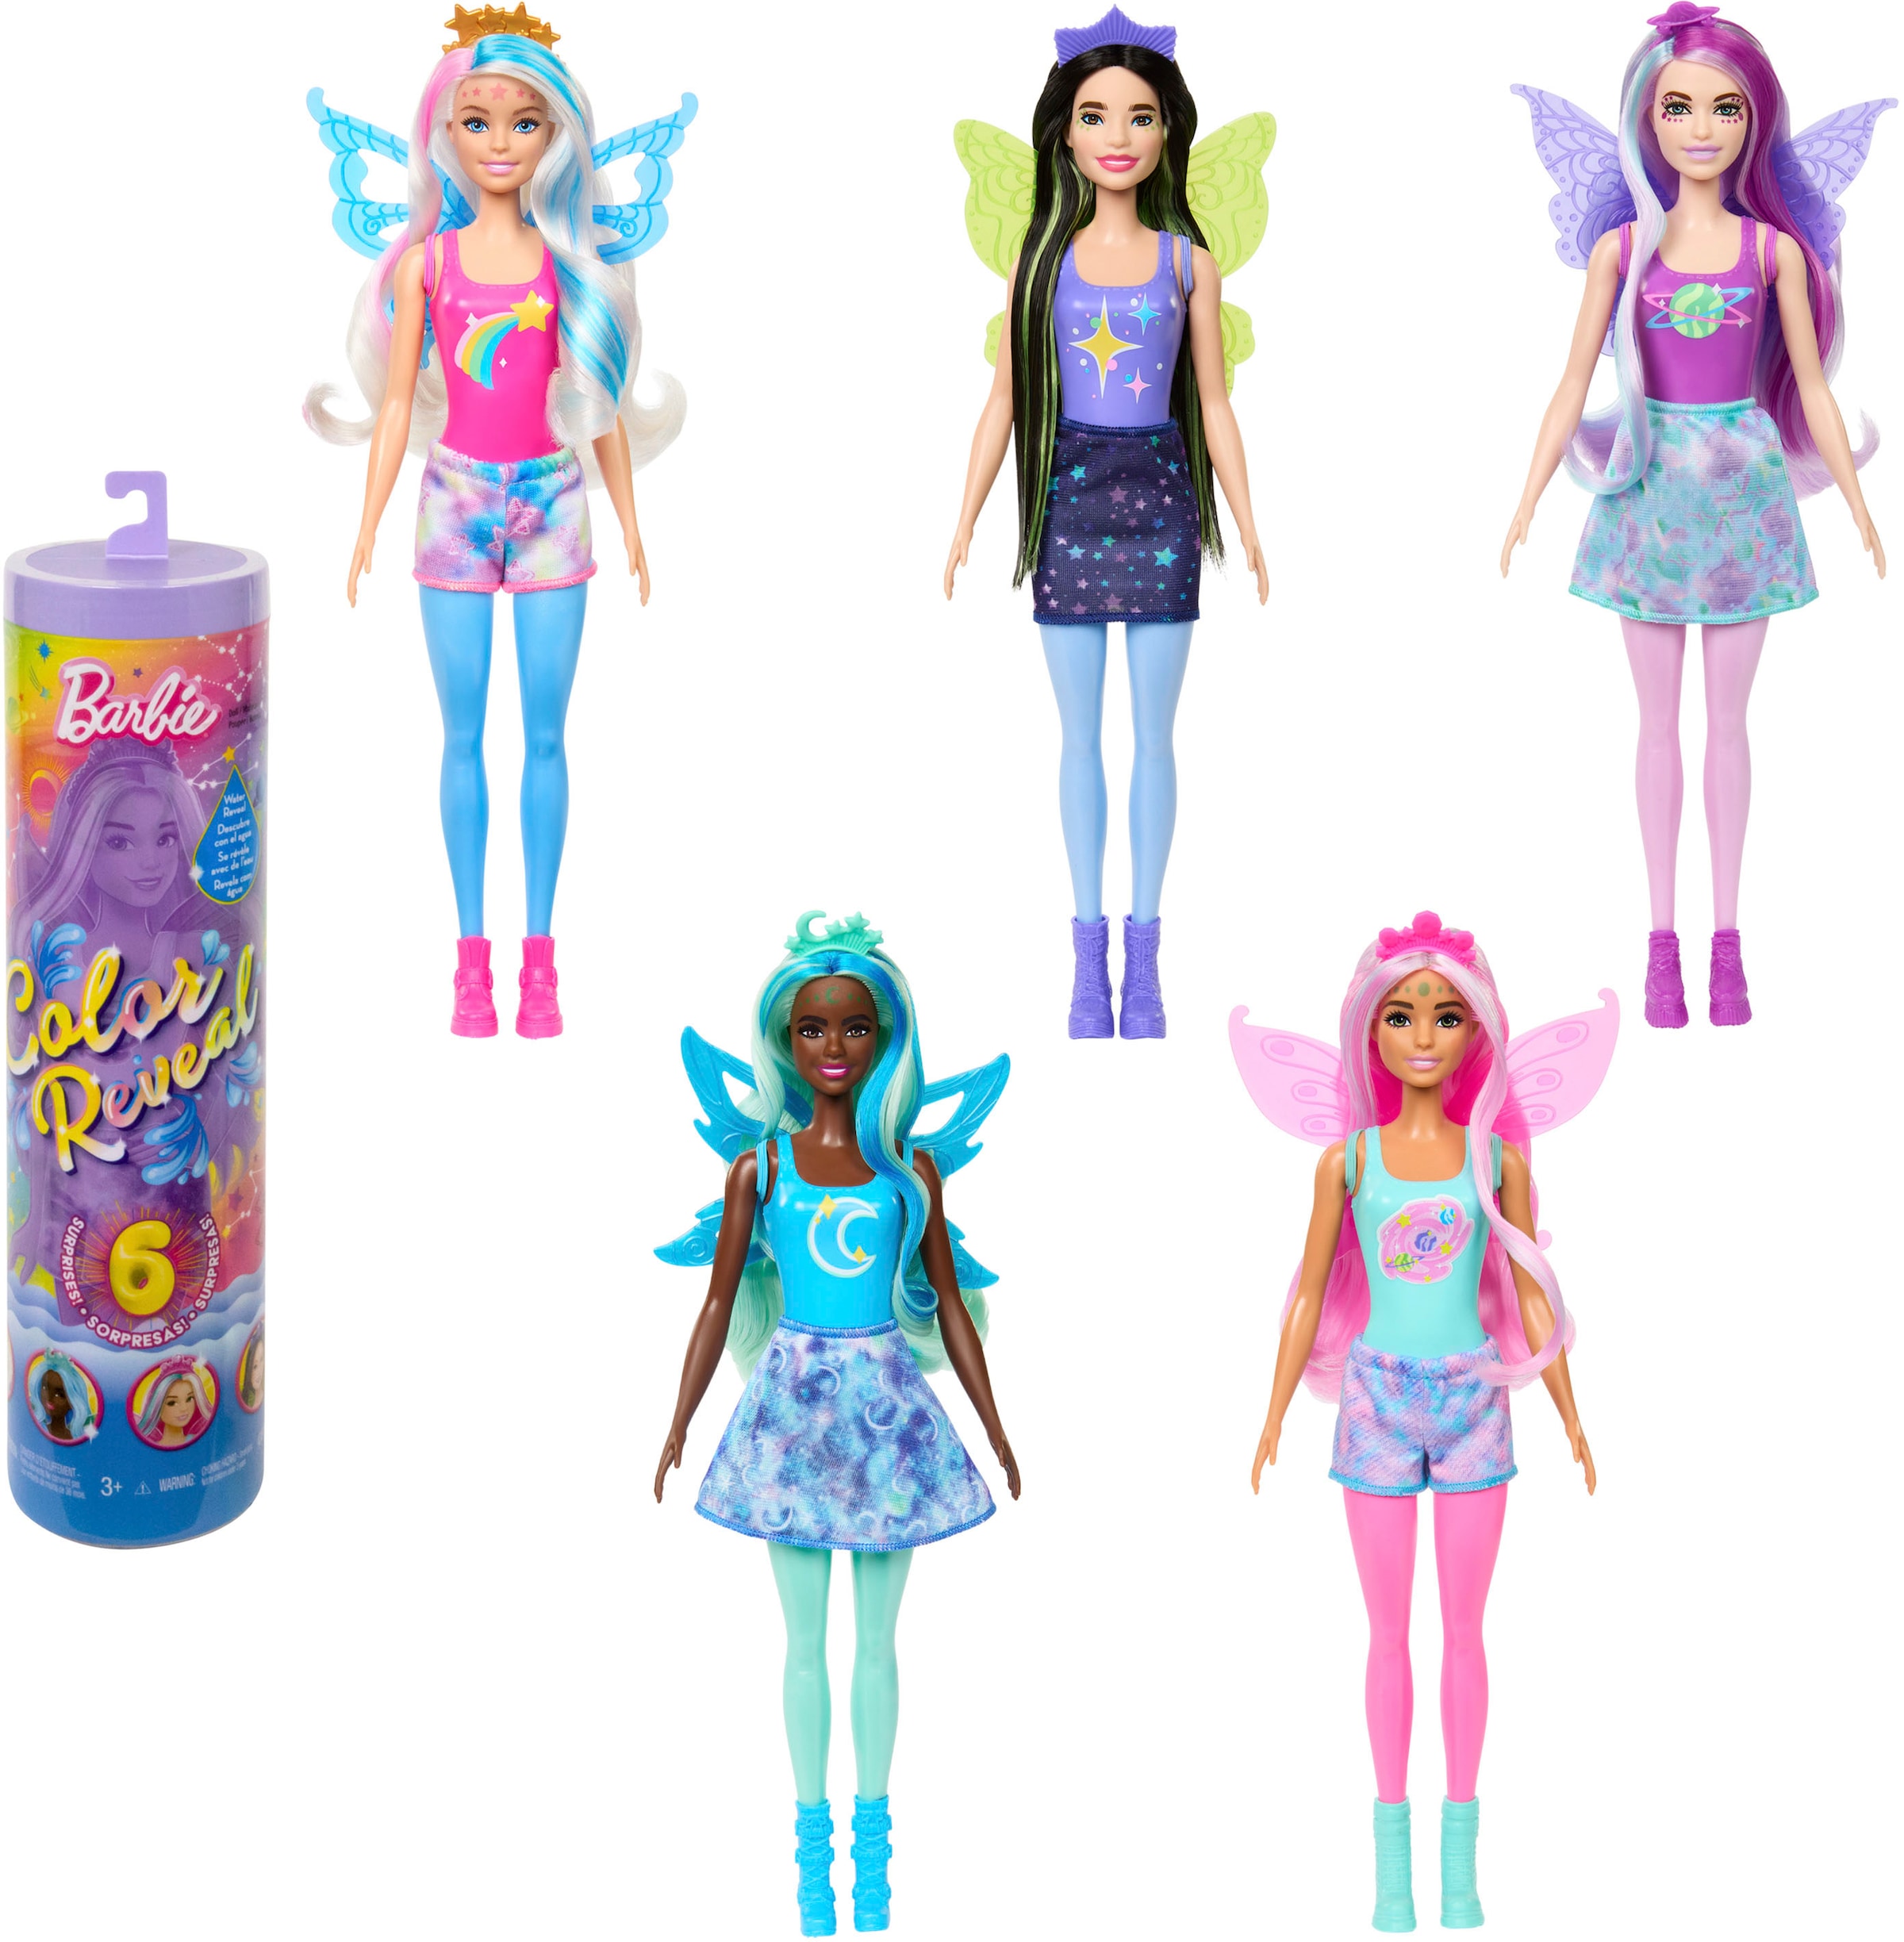 Barbie Anziehpuppe »Color Reveal, Regenbogengalaxie«, mit bei Farbwechsel